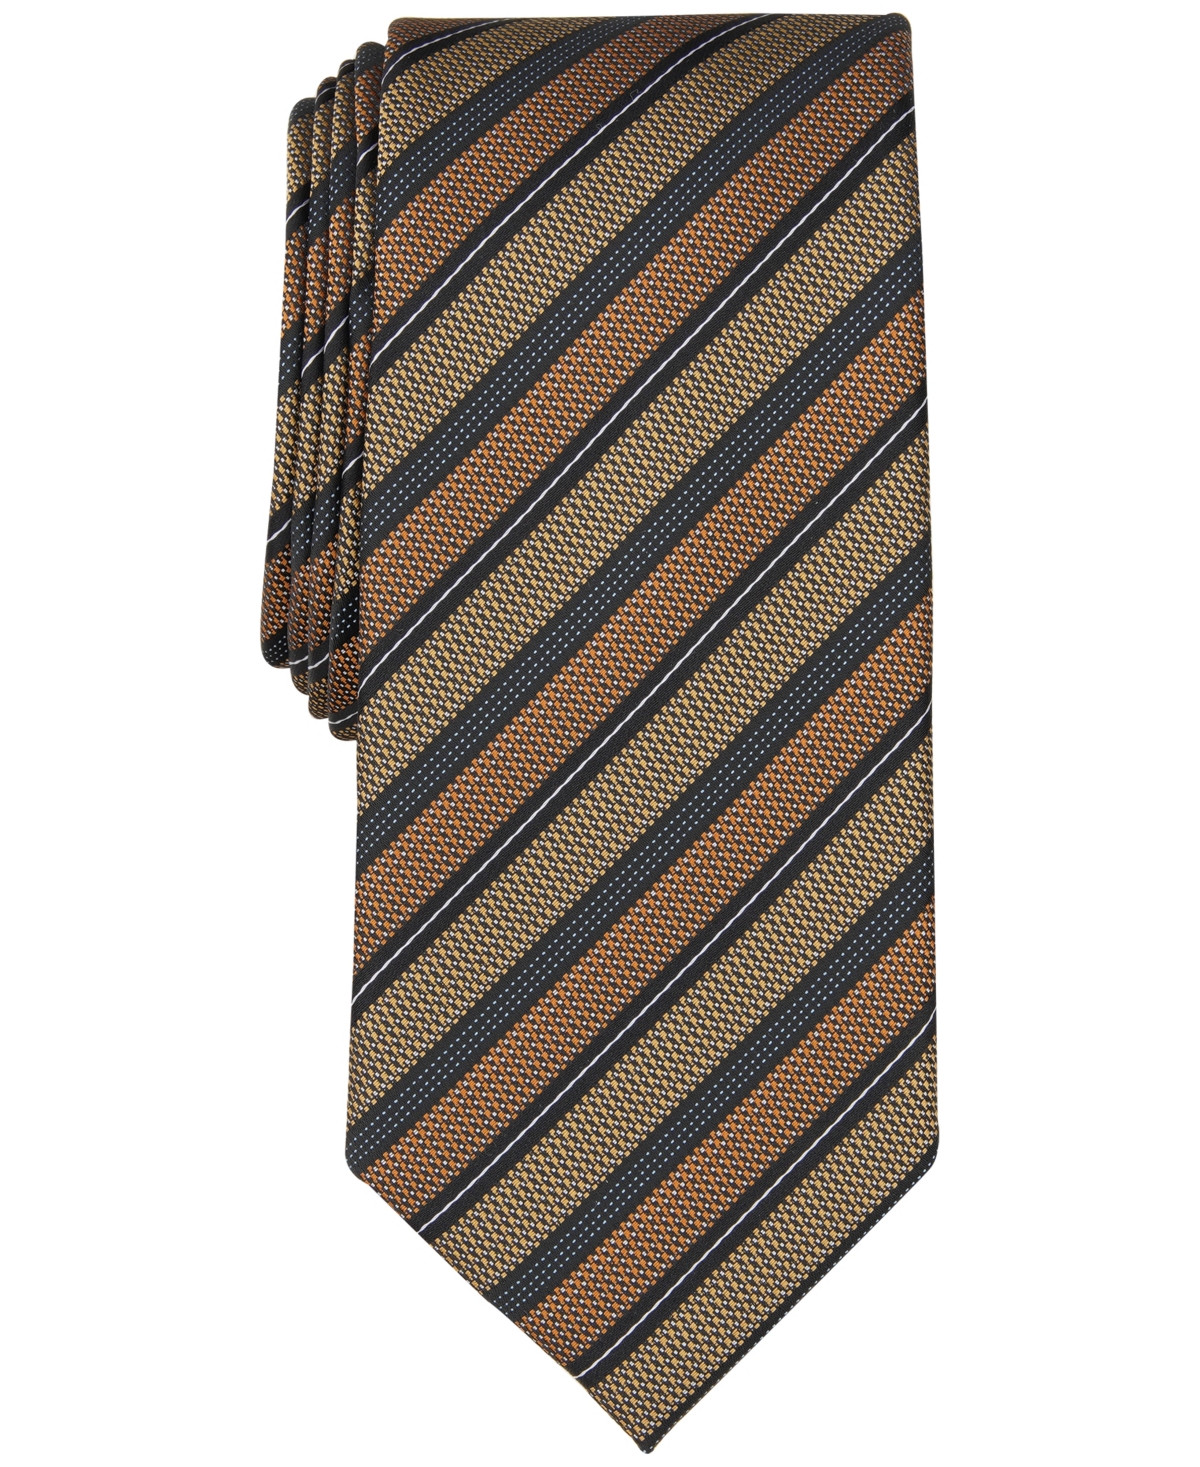 Men's Farrell Stripe Tie, Created for Macy's - Cognac